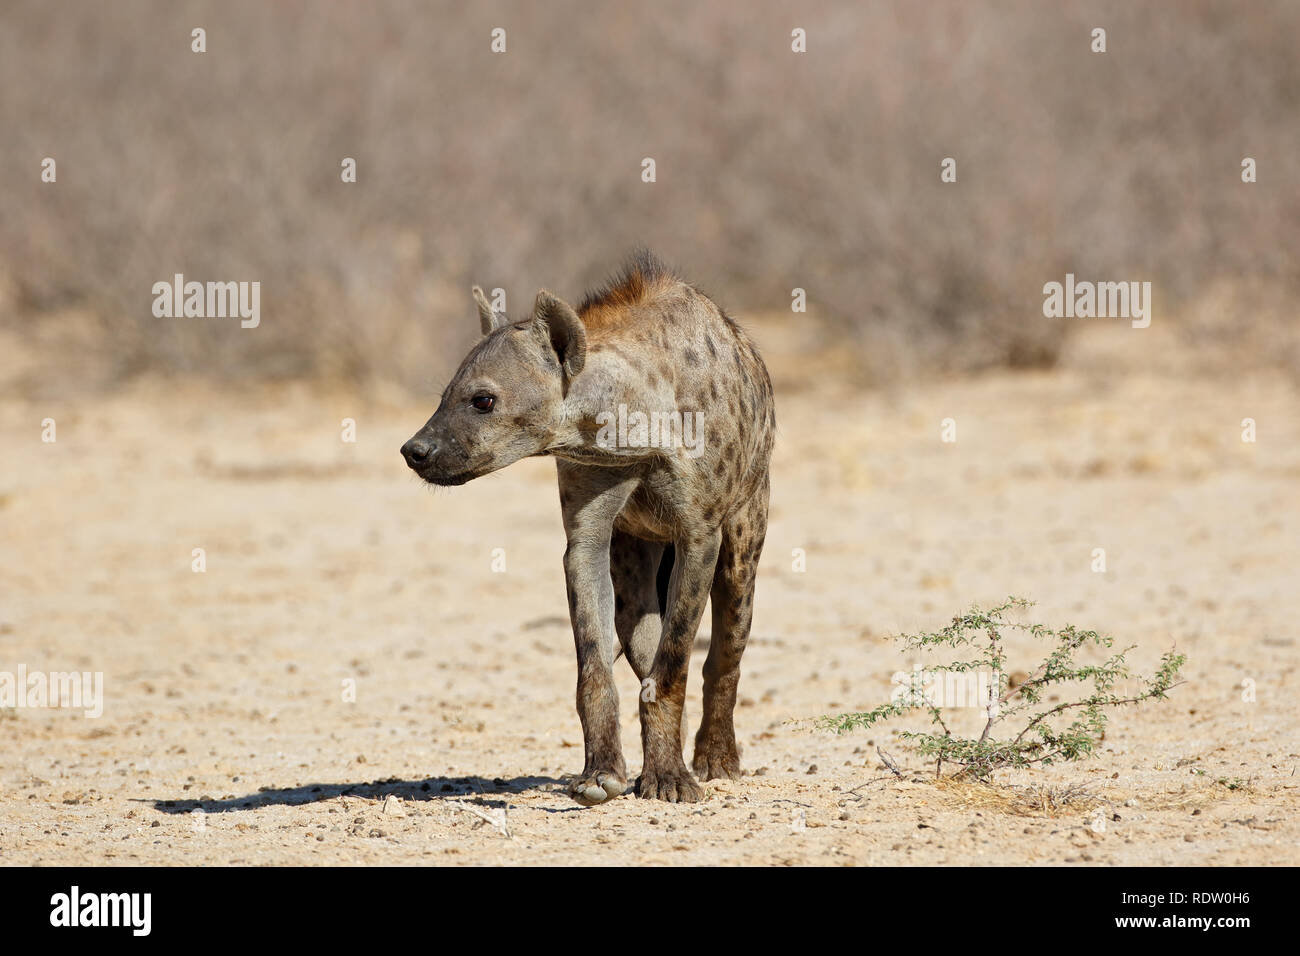 A spotted hyena (Crocuta crocuta) in natural habitat, Kalahari desert, South Africa Stock Photo